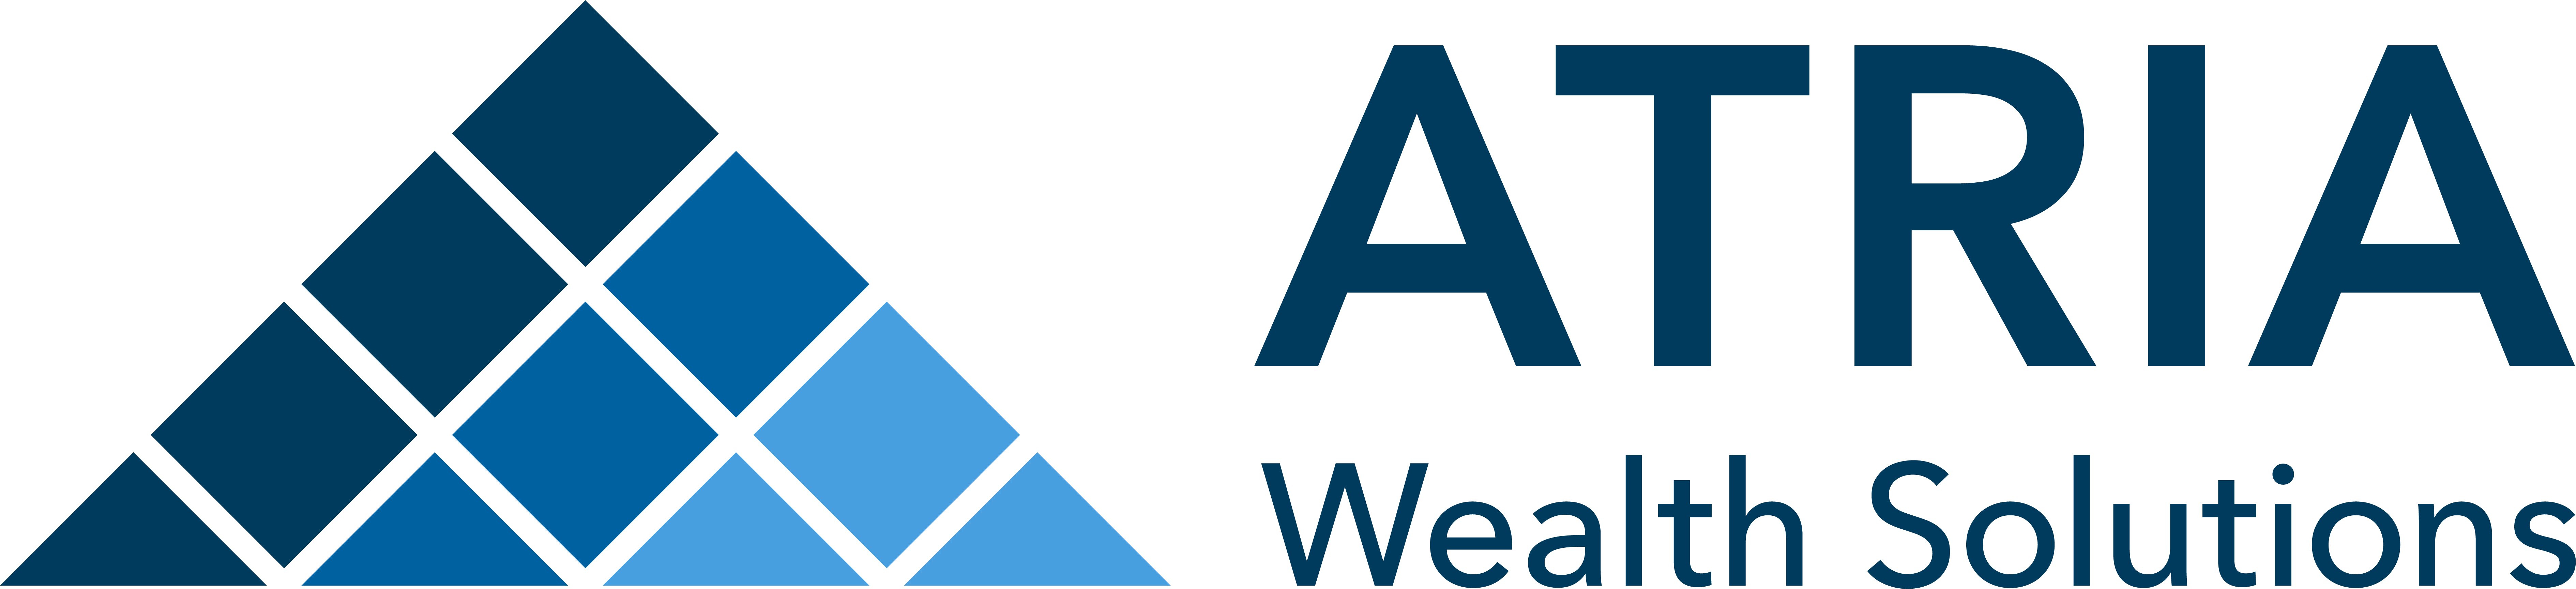 Atria Wealth Solutions_Logo.jpg